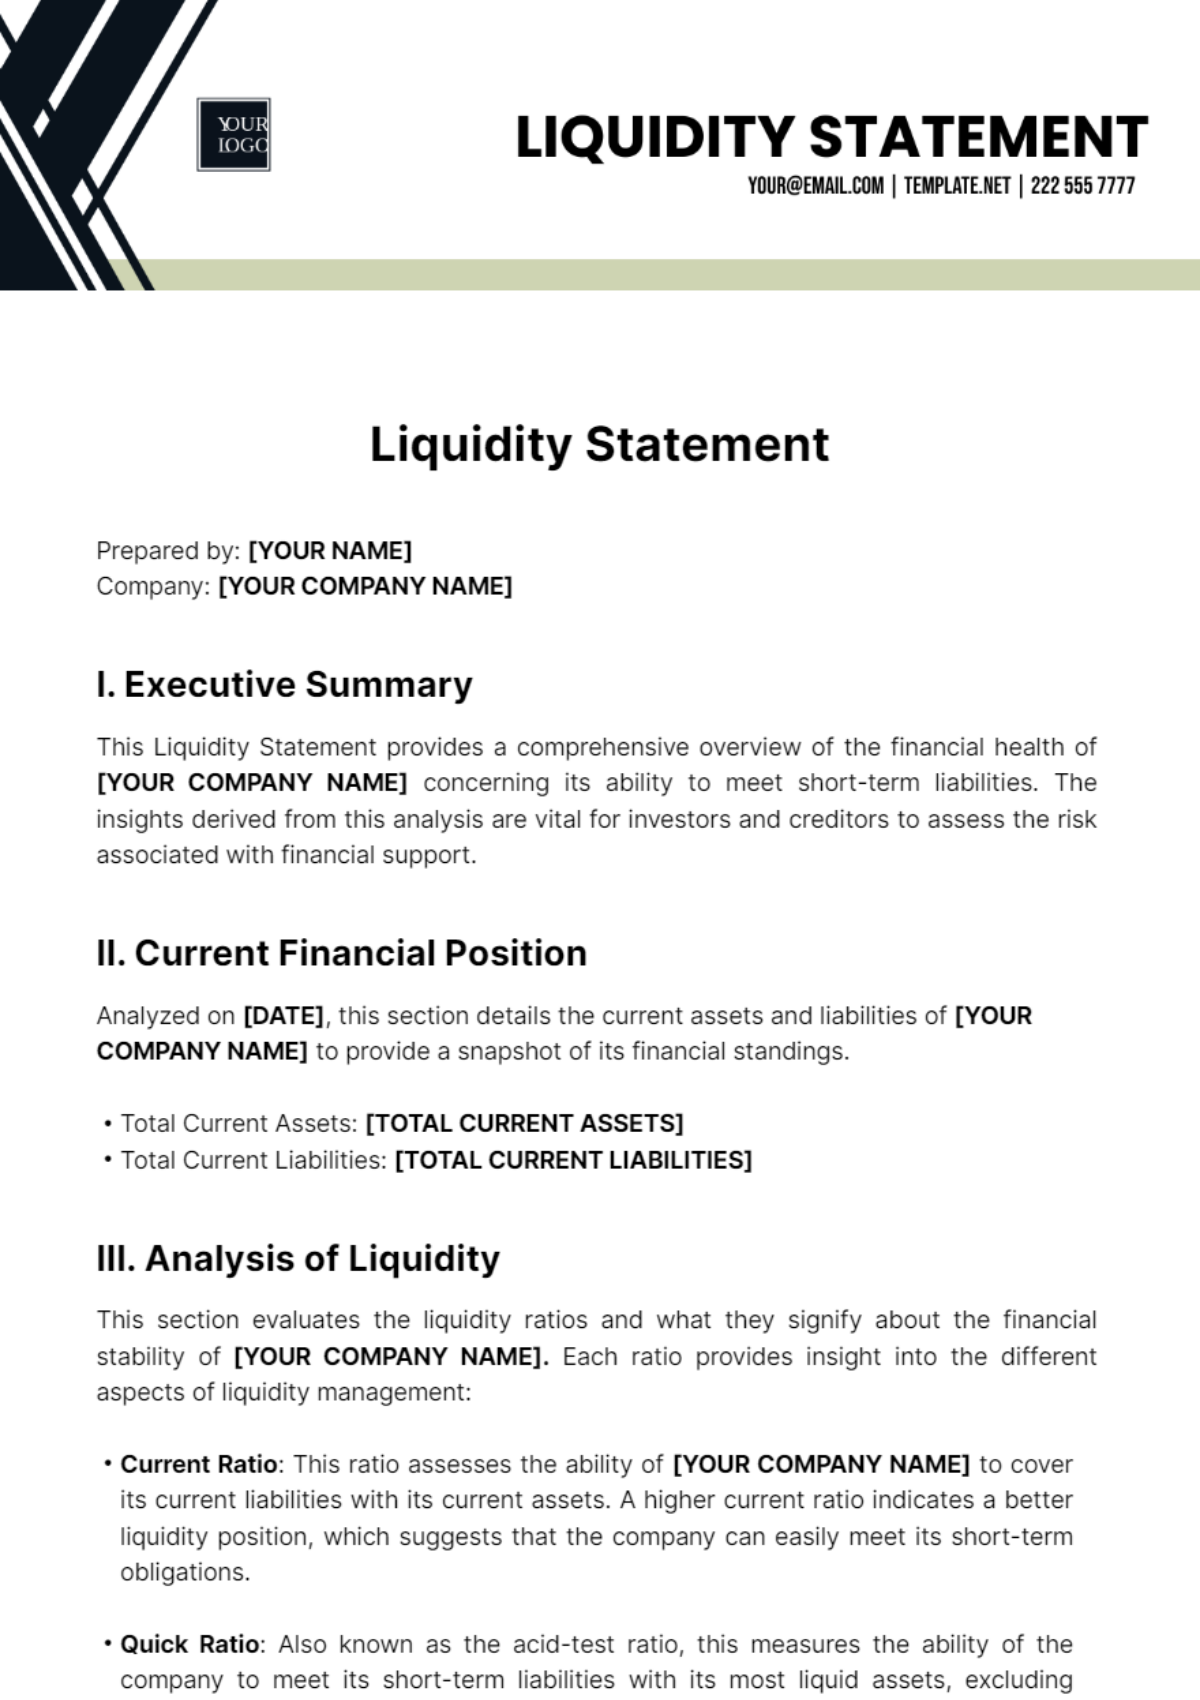 Free Liquidity Statement Template